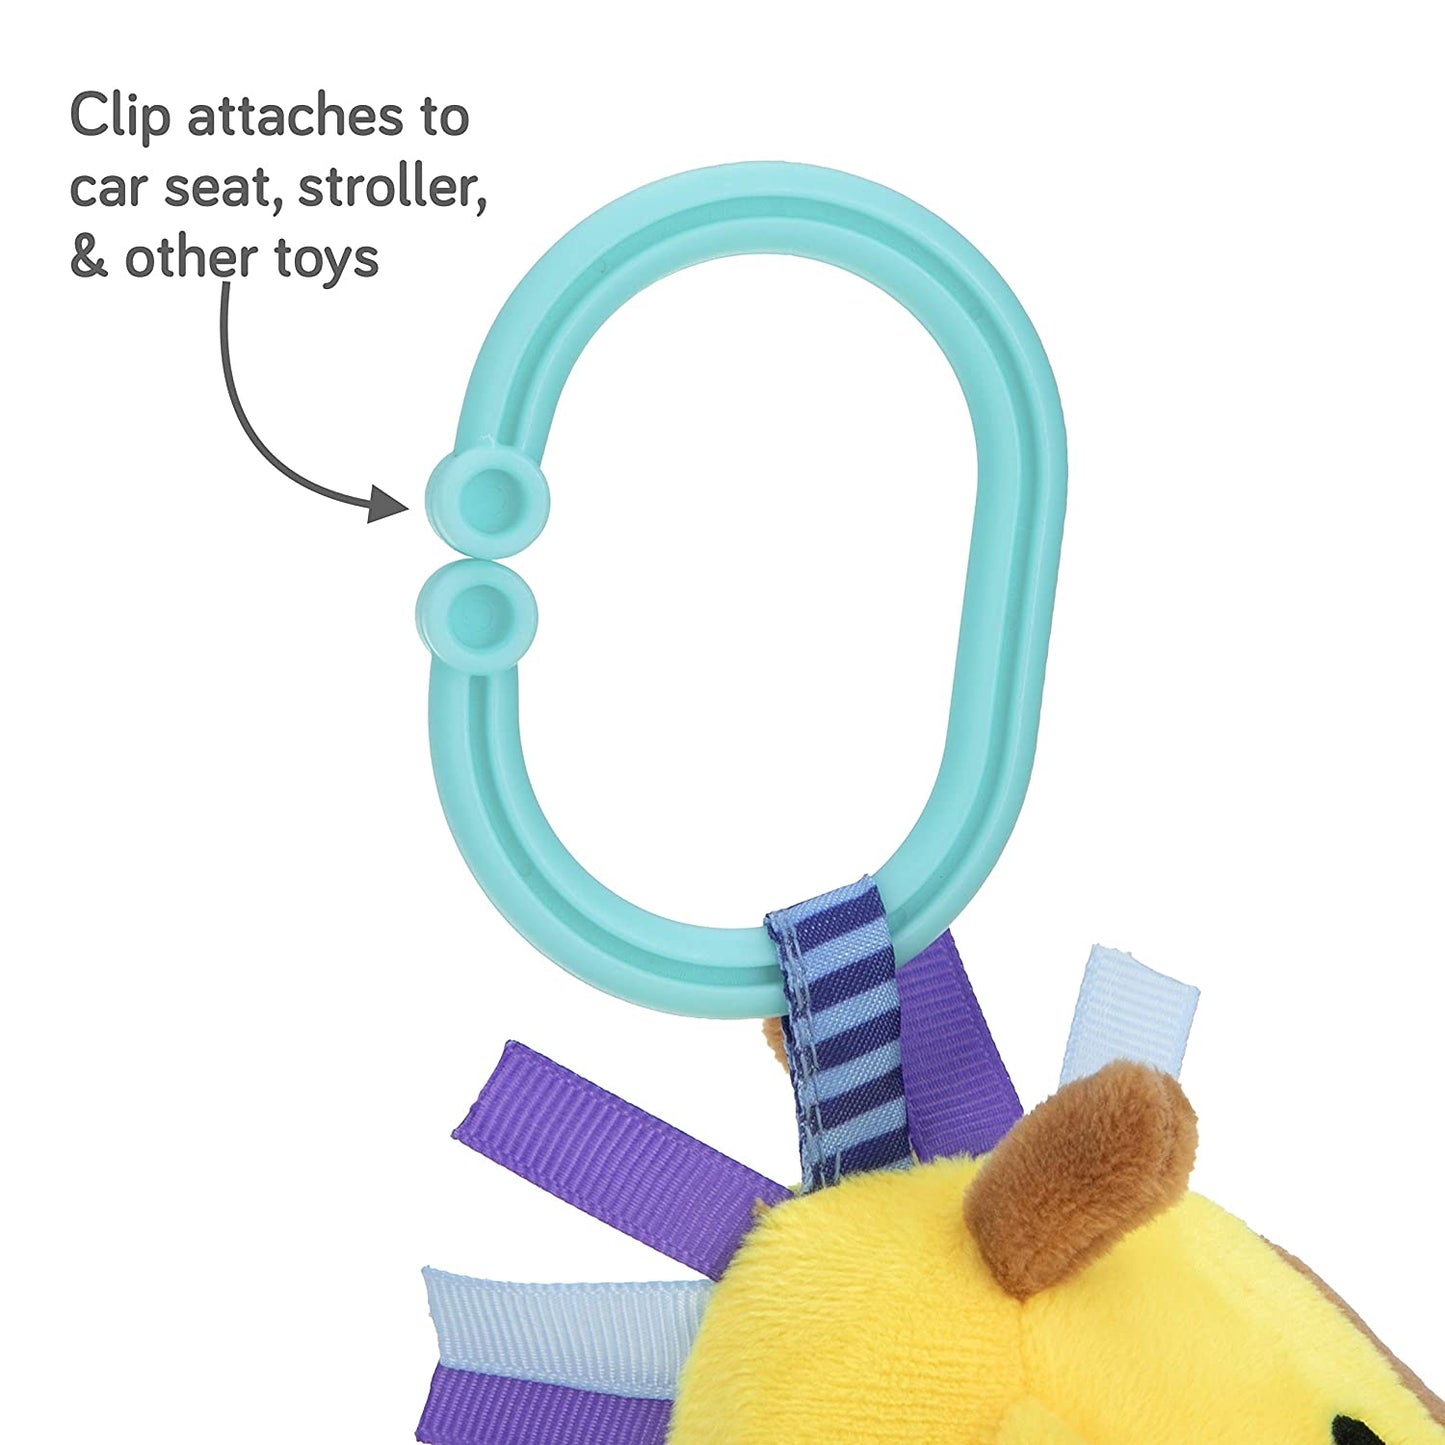 Nuby Interactive Soft Plush Pal Toy- Om+, Characters Vary - Monkey, Elephant, Giraffe